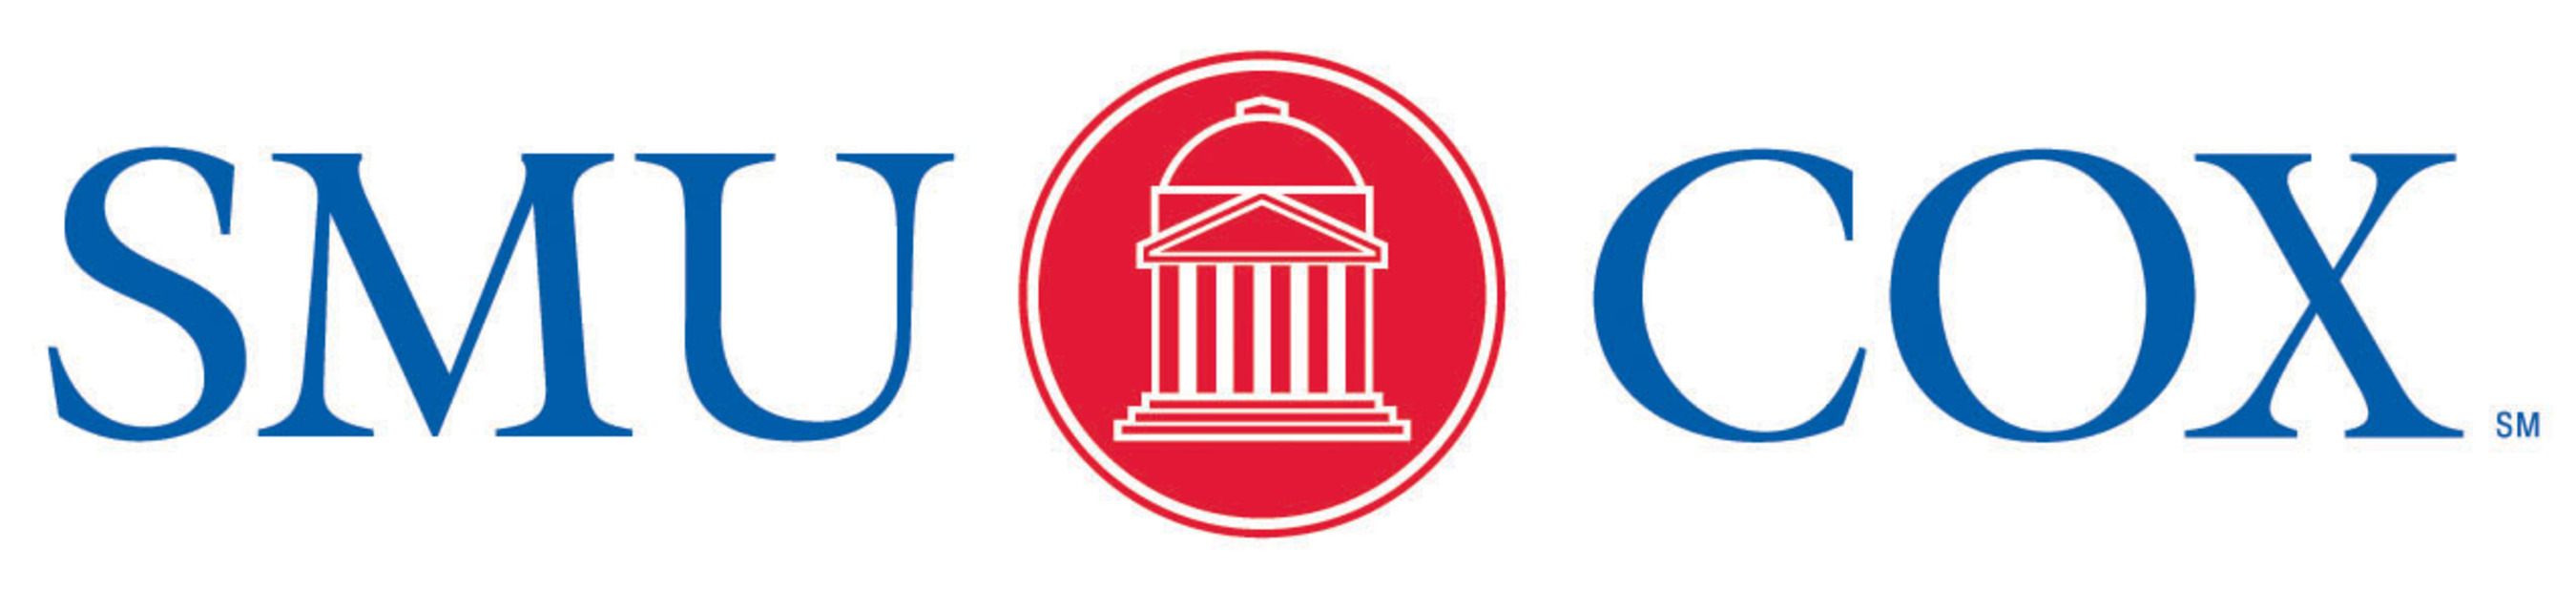 SMU Cox School of Business logo.